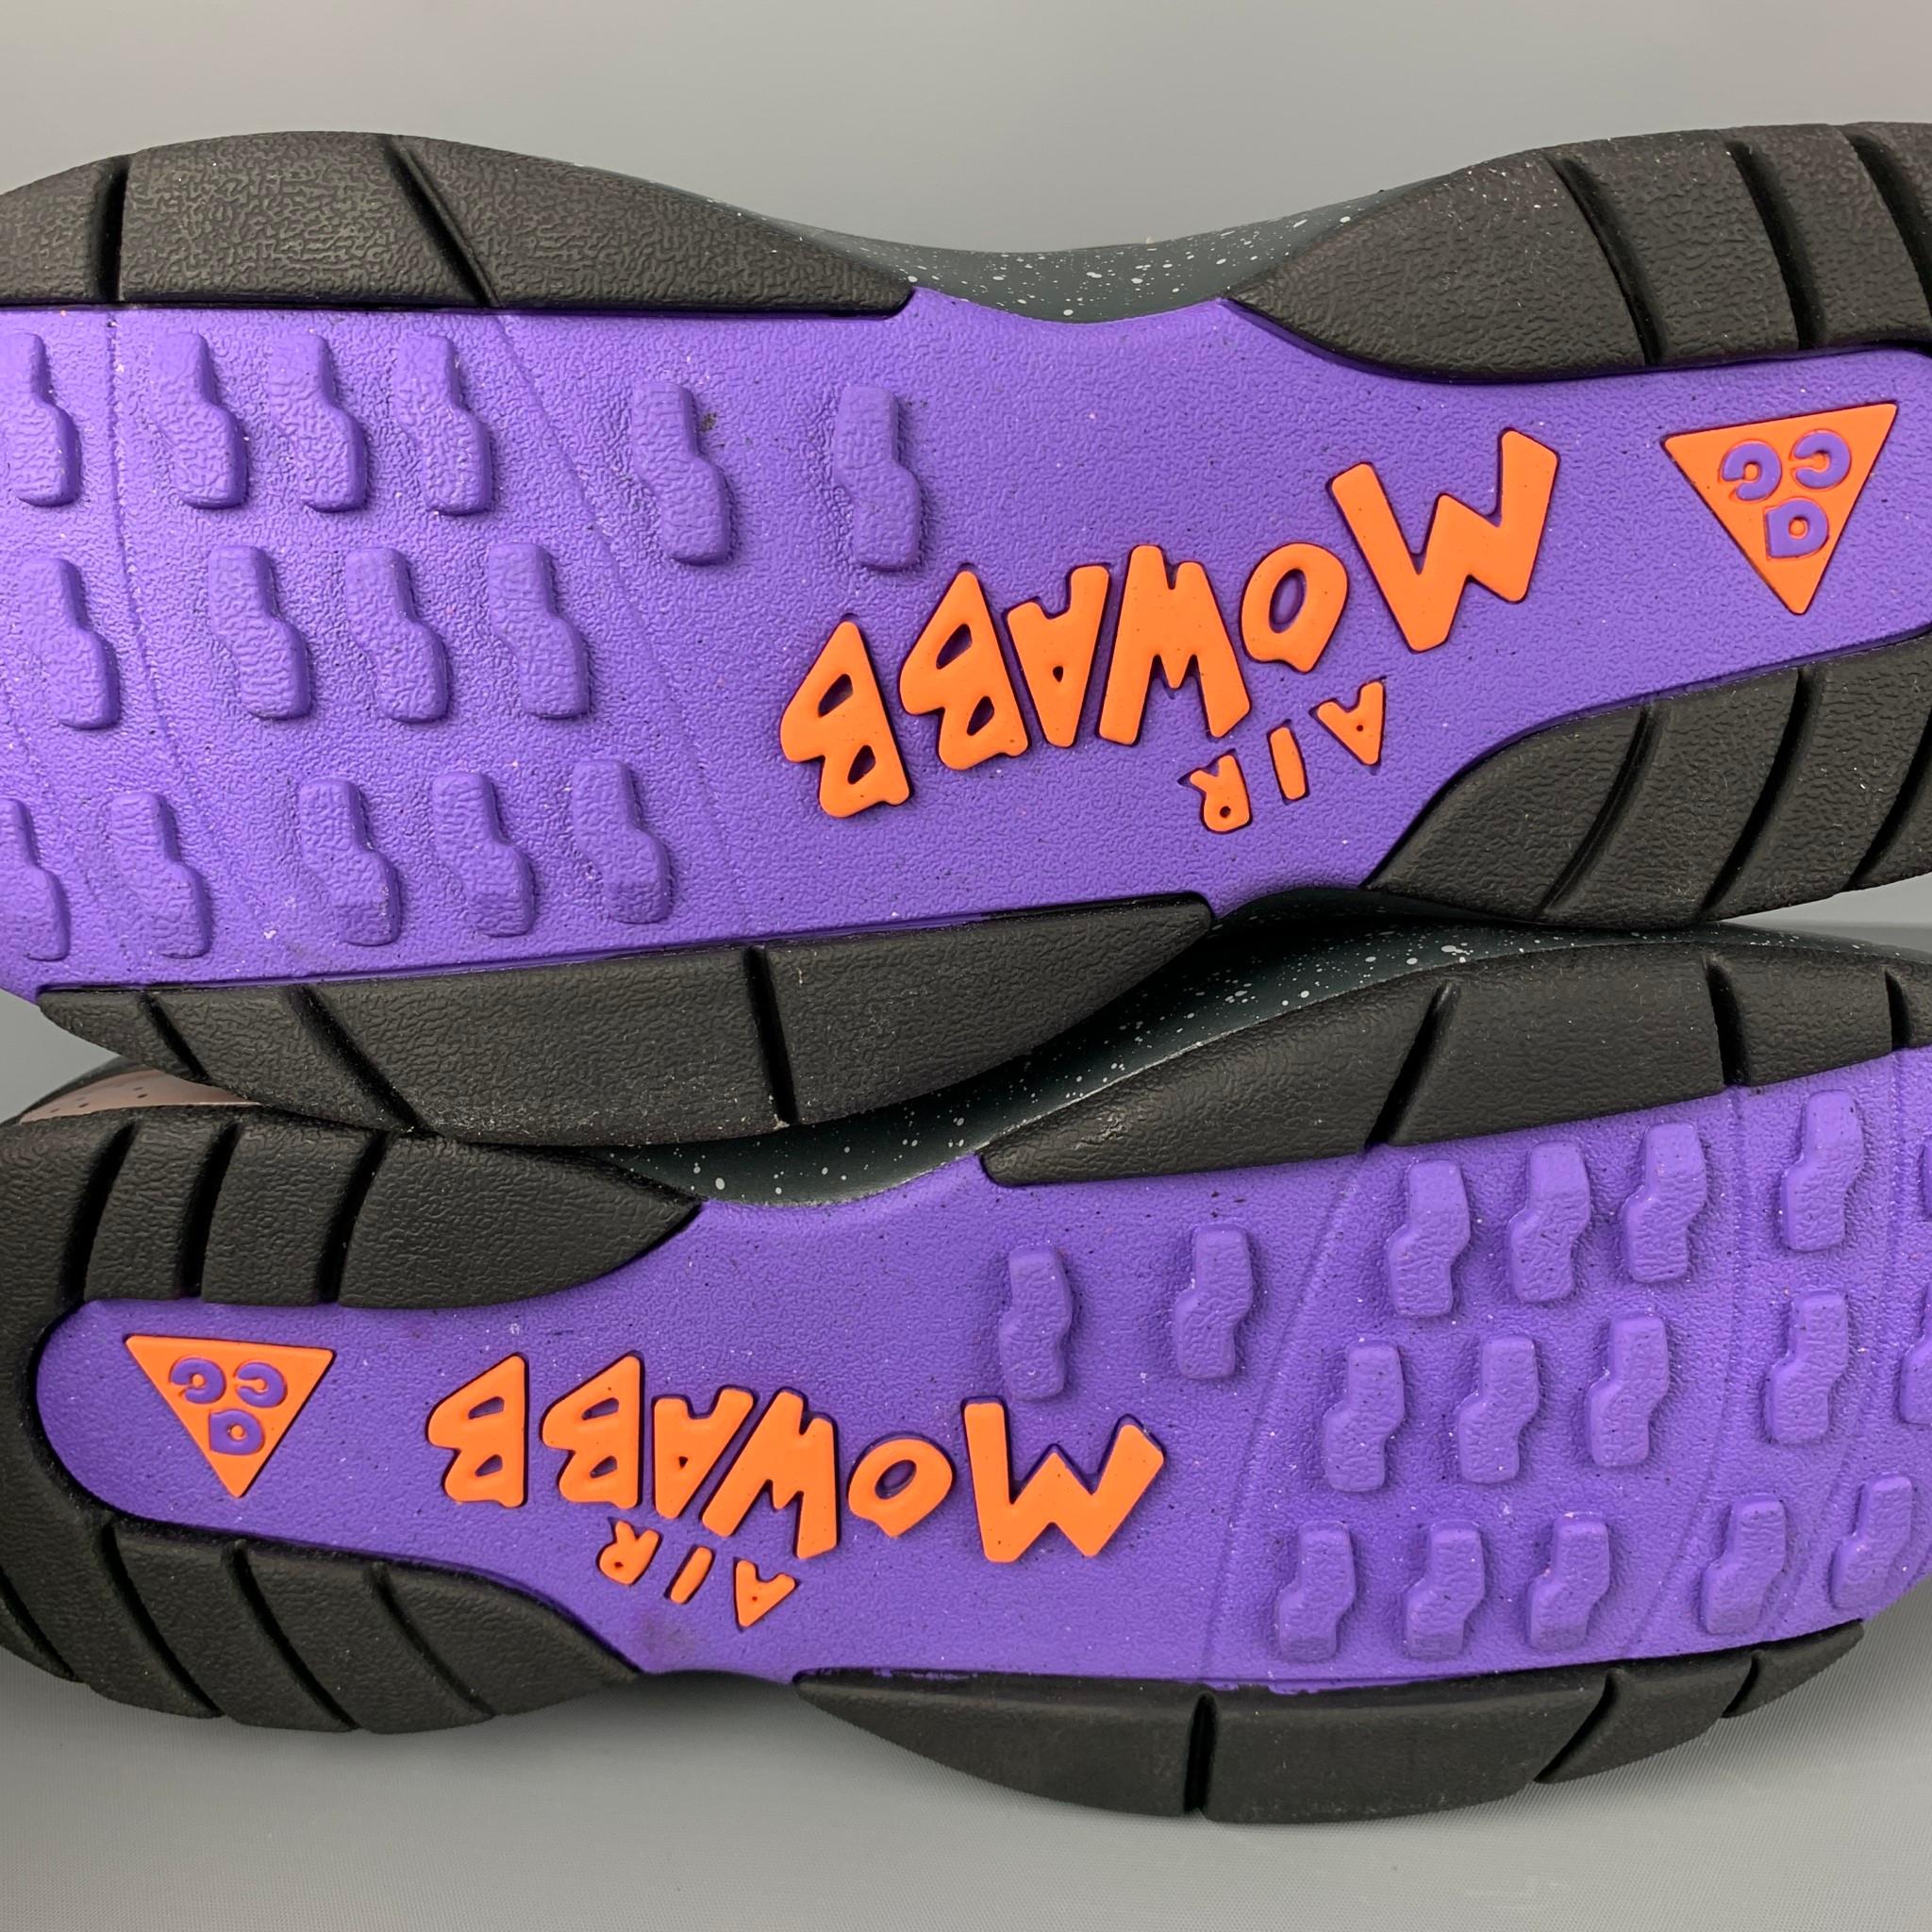 Men's NIKE ACG AIR MOWABB Size 9.5 Brown Purple High Top Sneakers